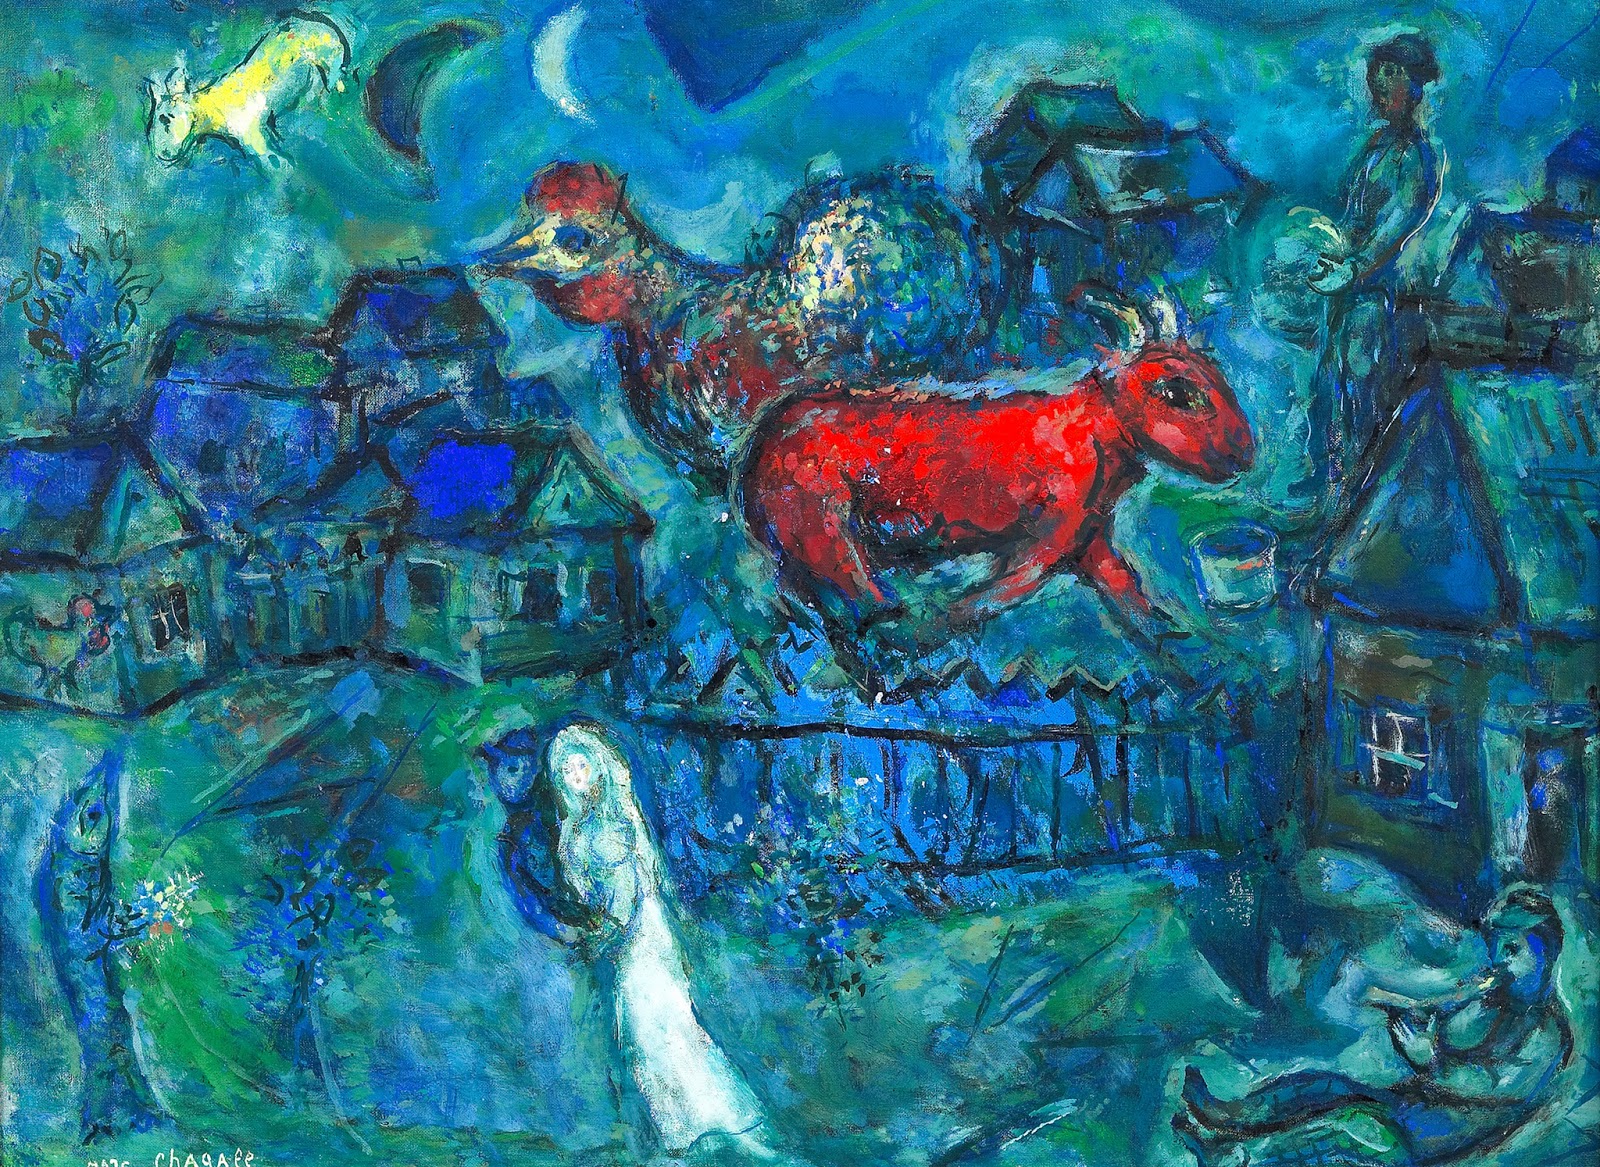 Marc+Chagall-1887-1985 (57).jpg